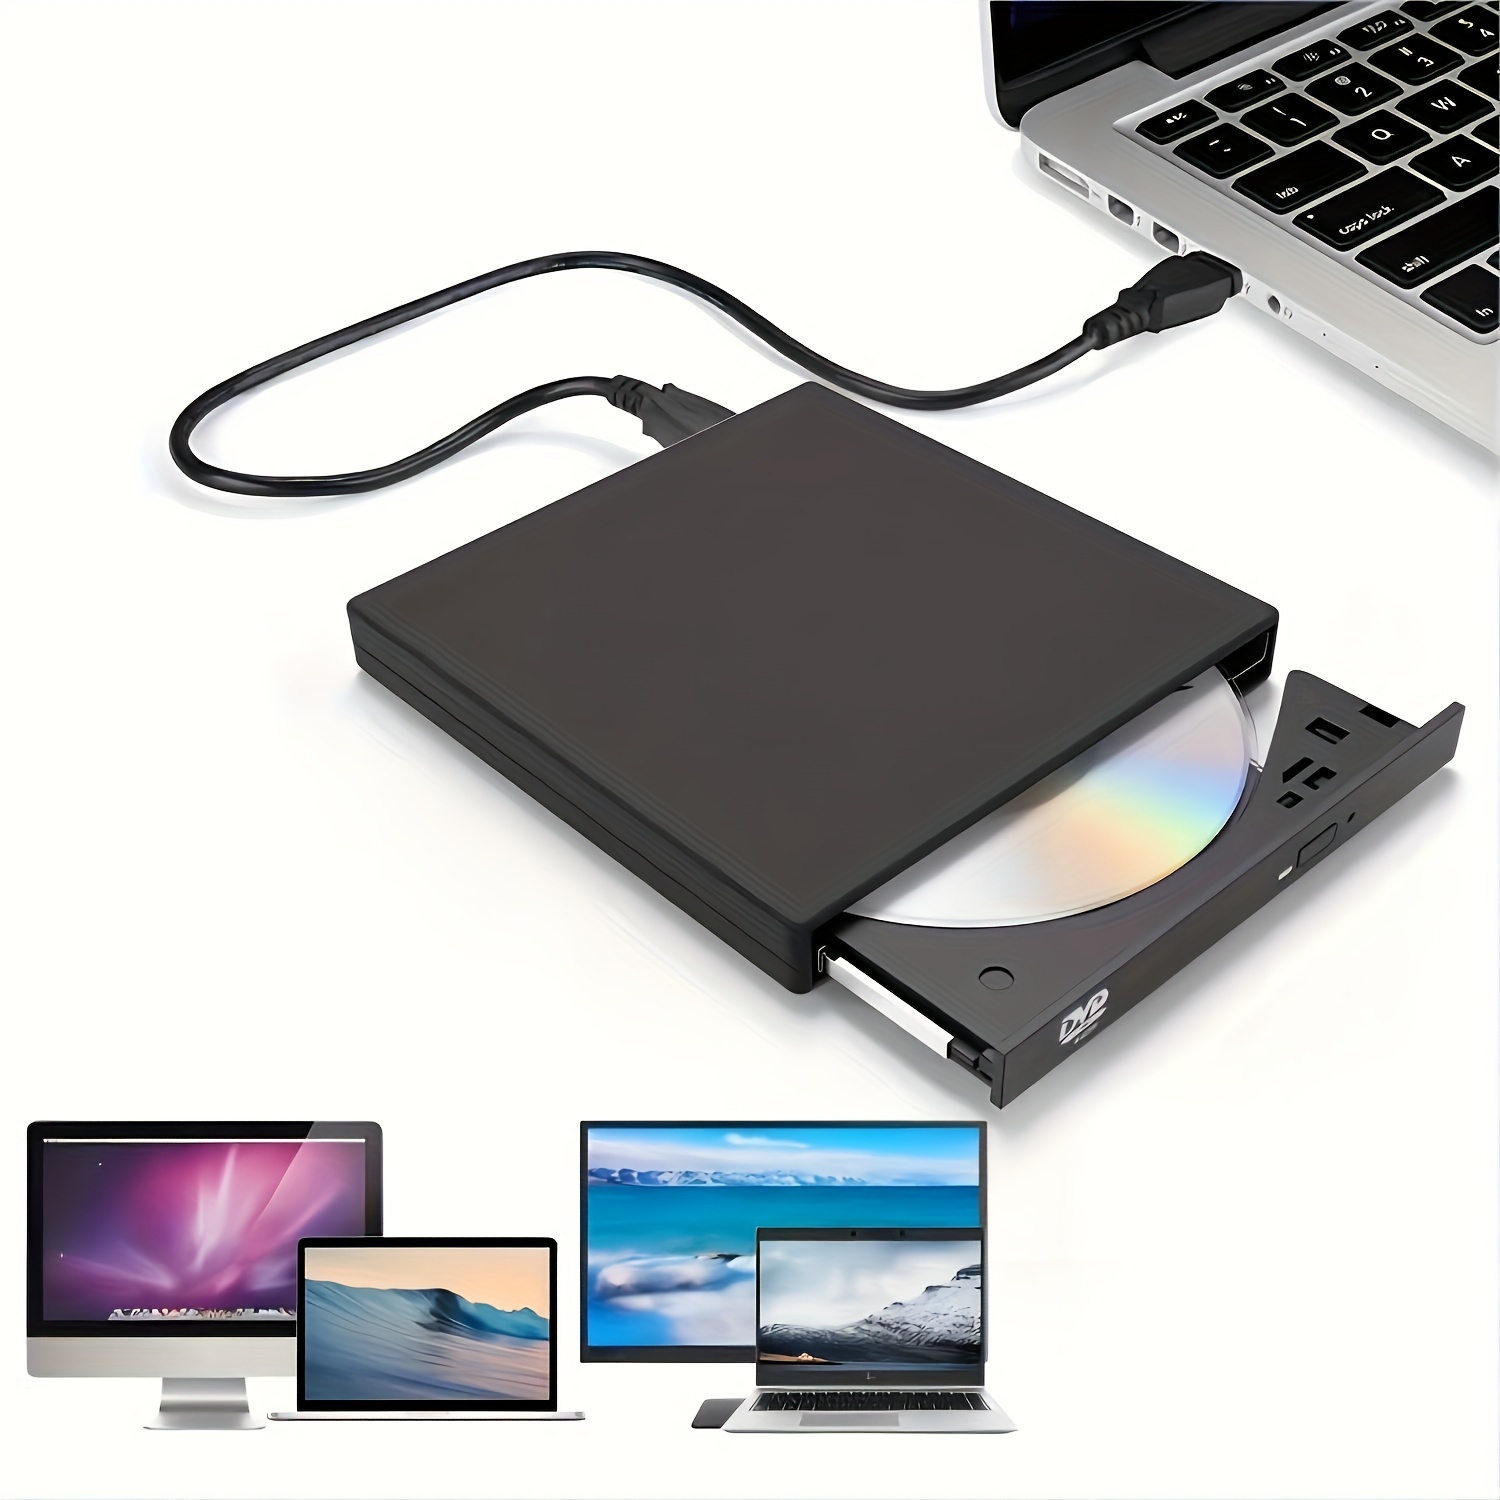 Buy External DVD Drive for Laptop and Desktop Black Online in UAE